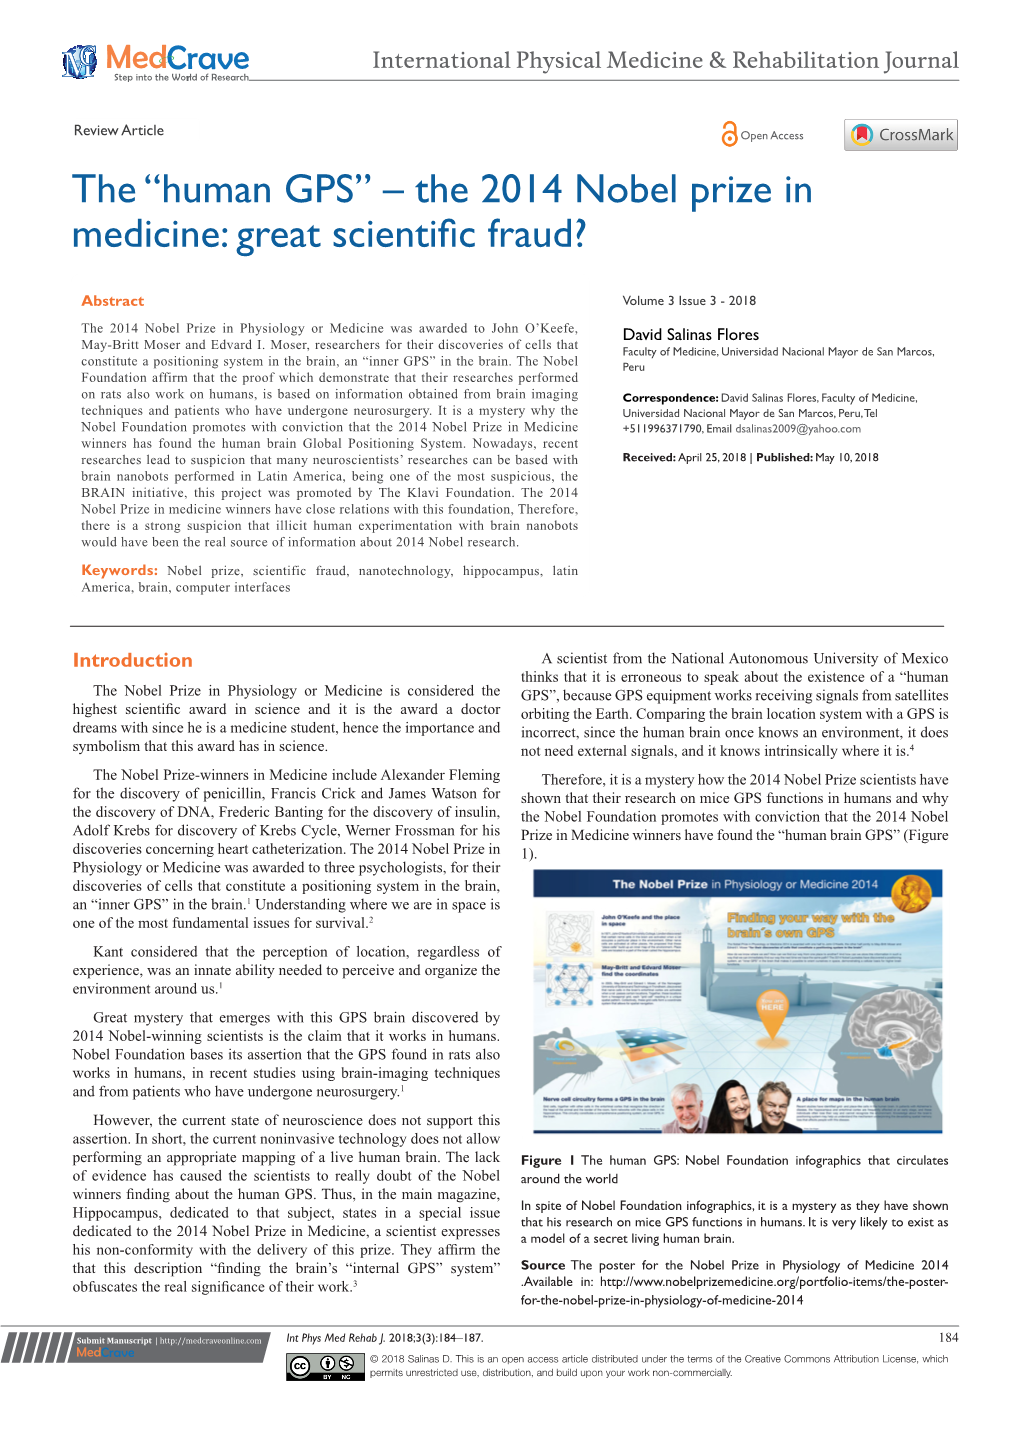 Human GPS” – the 2014 Nobel Prize in Medicine: Great Scientific Fraud?